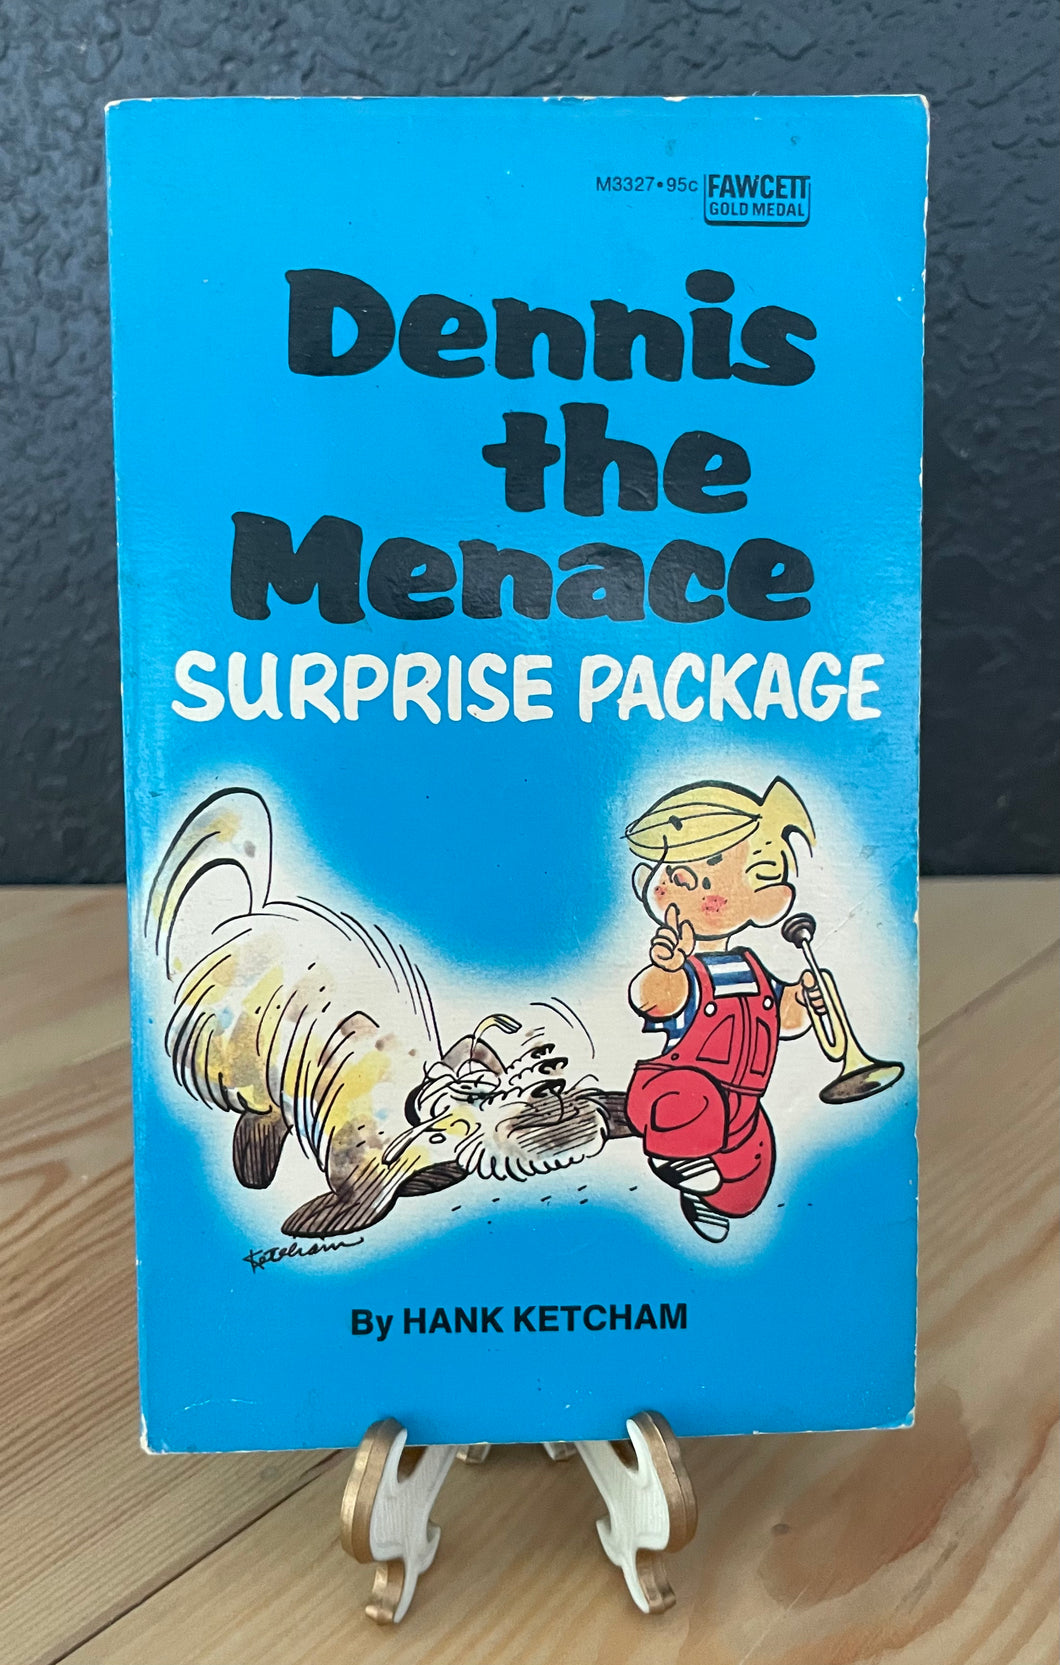 1971 “Dennis the Menace, Surprise Package” Vintage Paperback Book